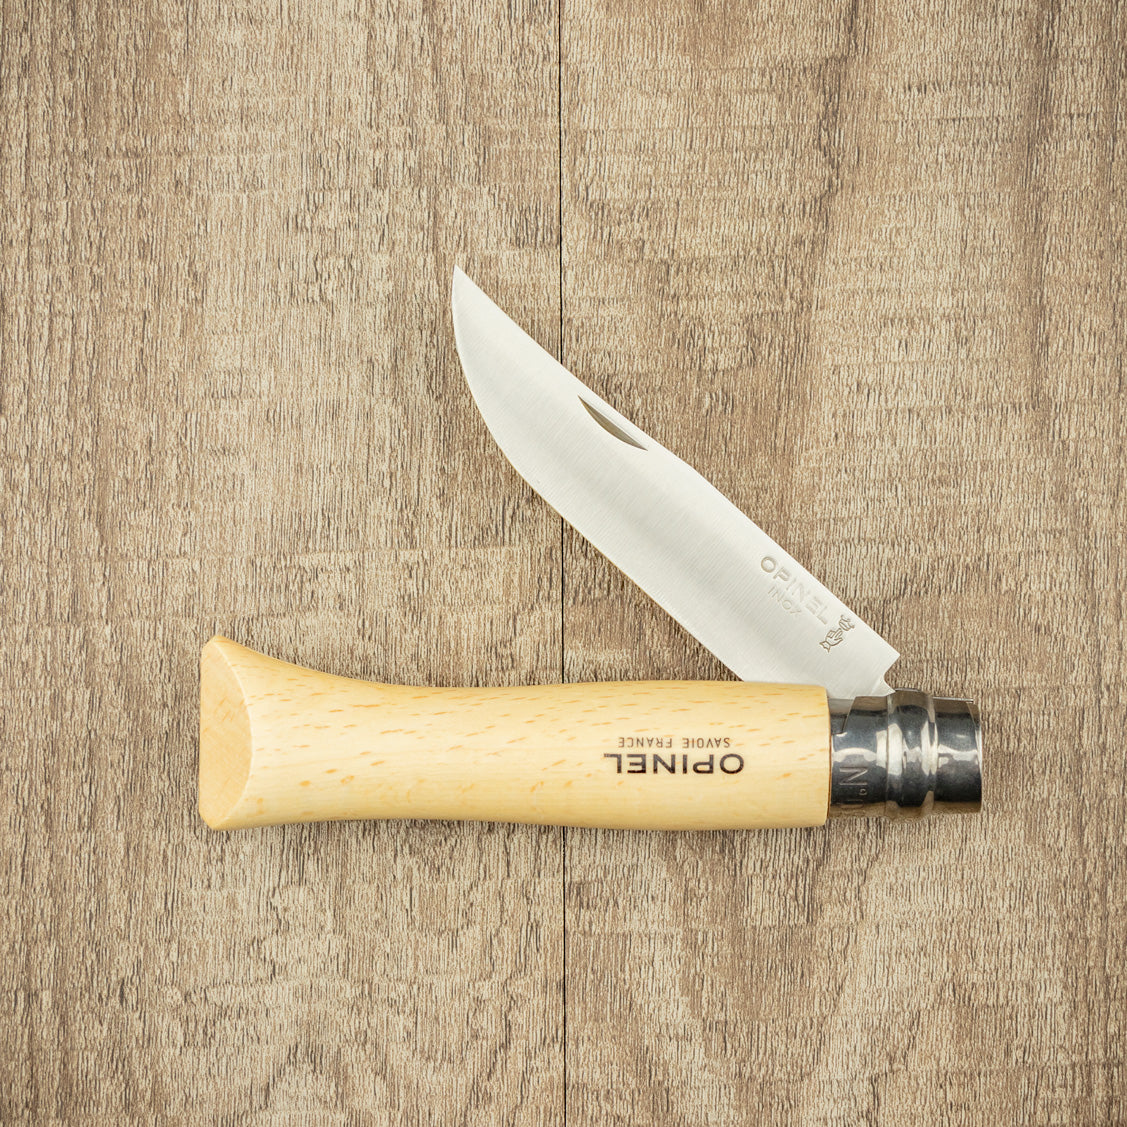 Opinel Inox No.09 Folding Knife